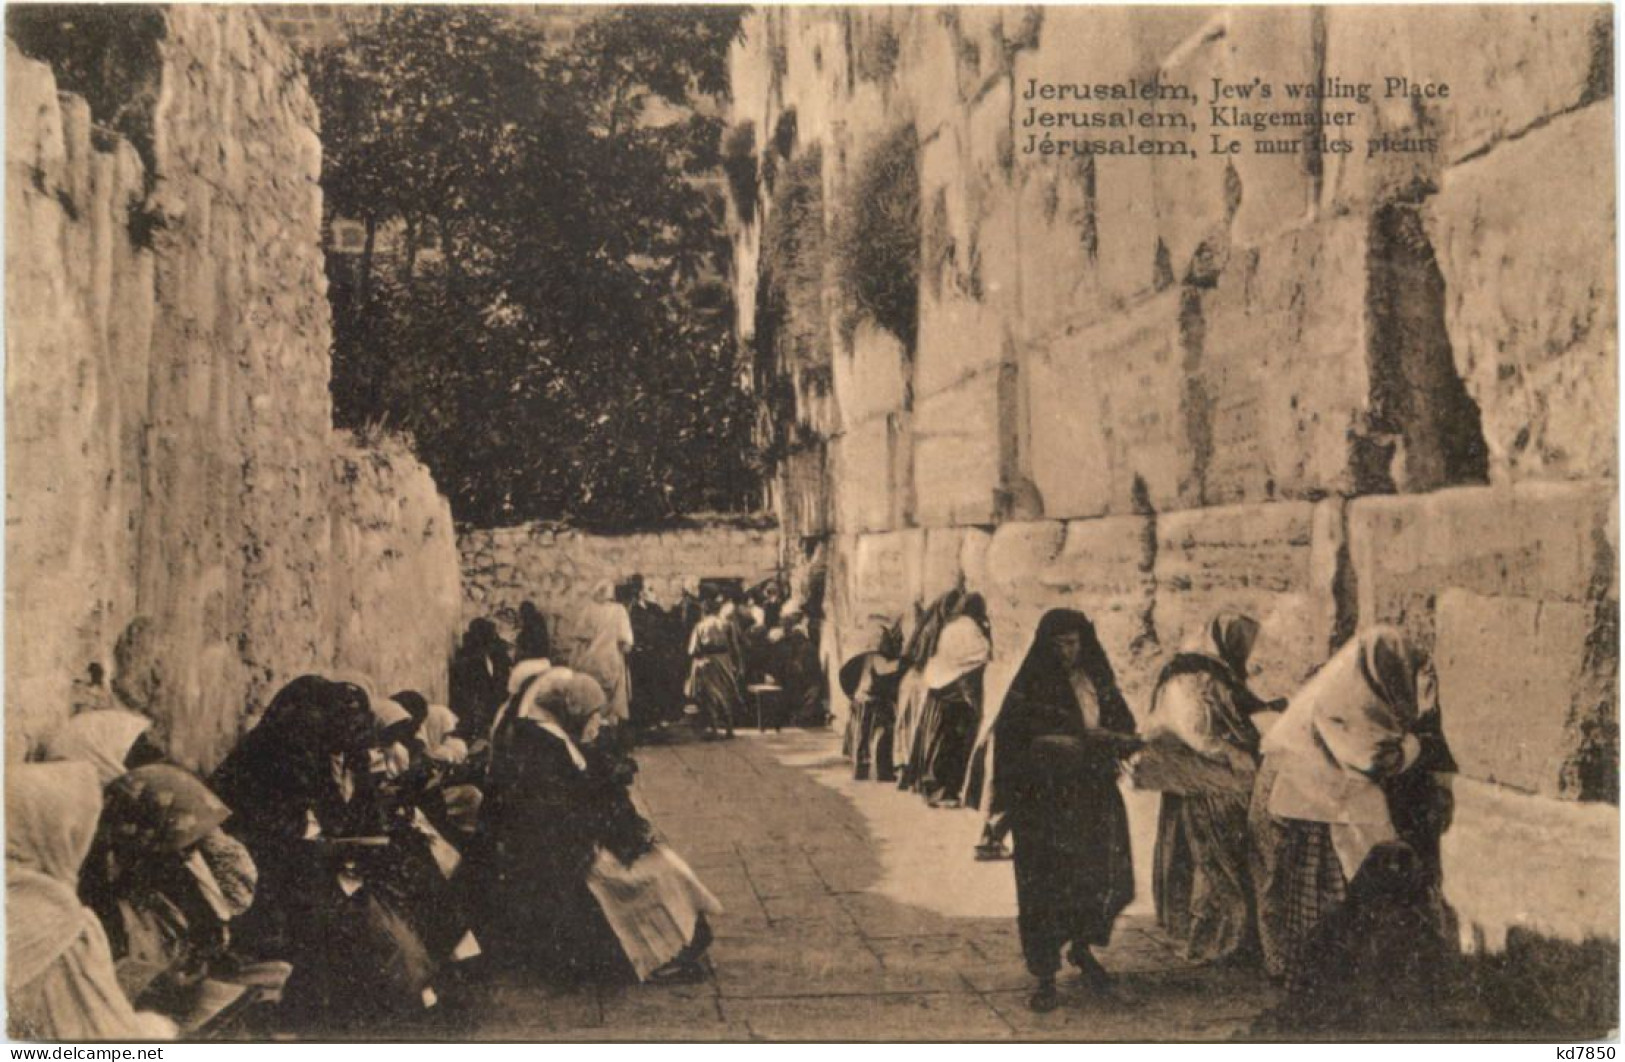 Jerusalem - Jews Willing Place - Judaika - Palestine